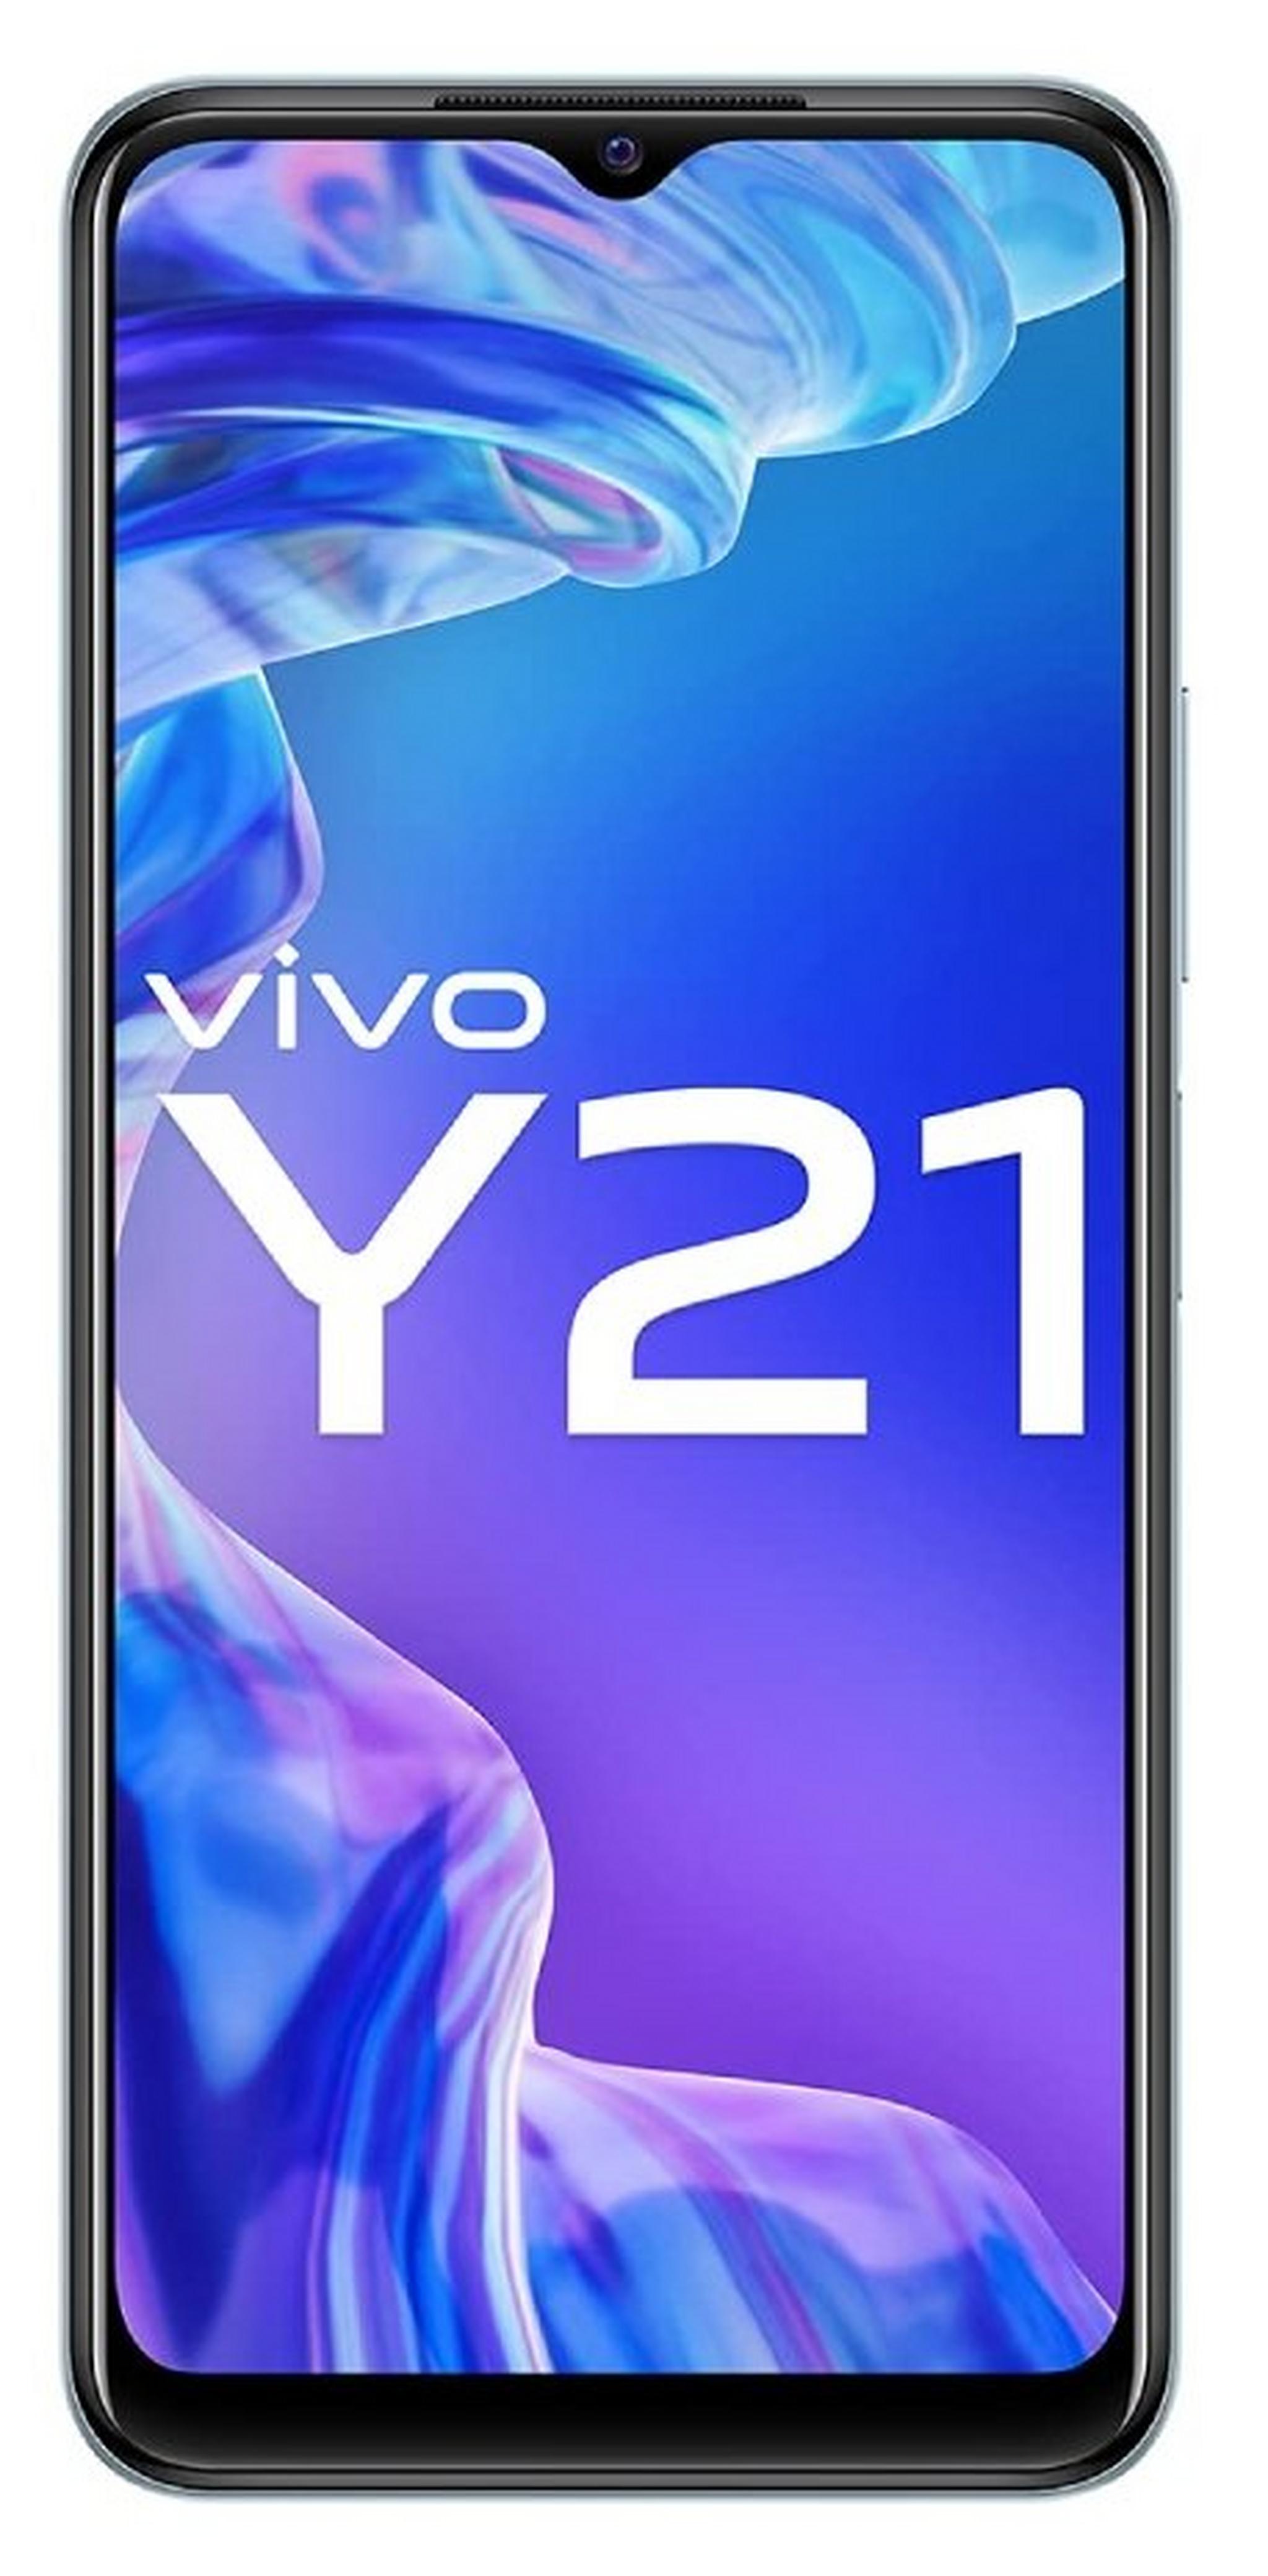 Vivo Y21 64GB Phone - Diamond Glow